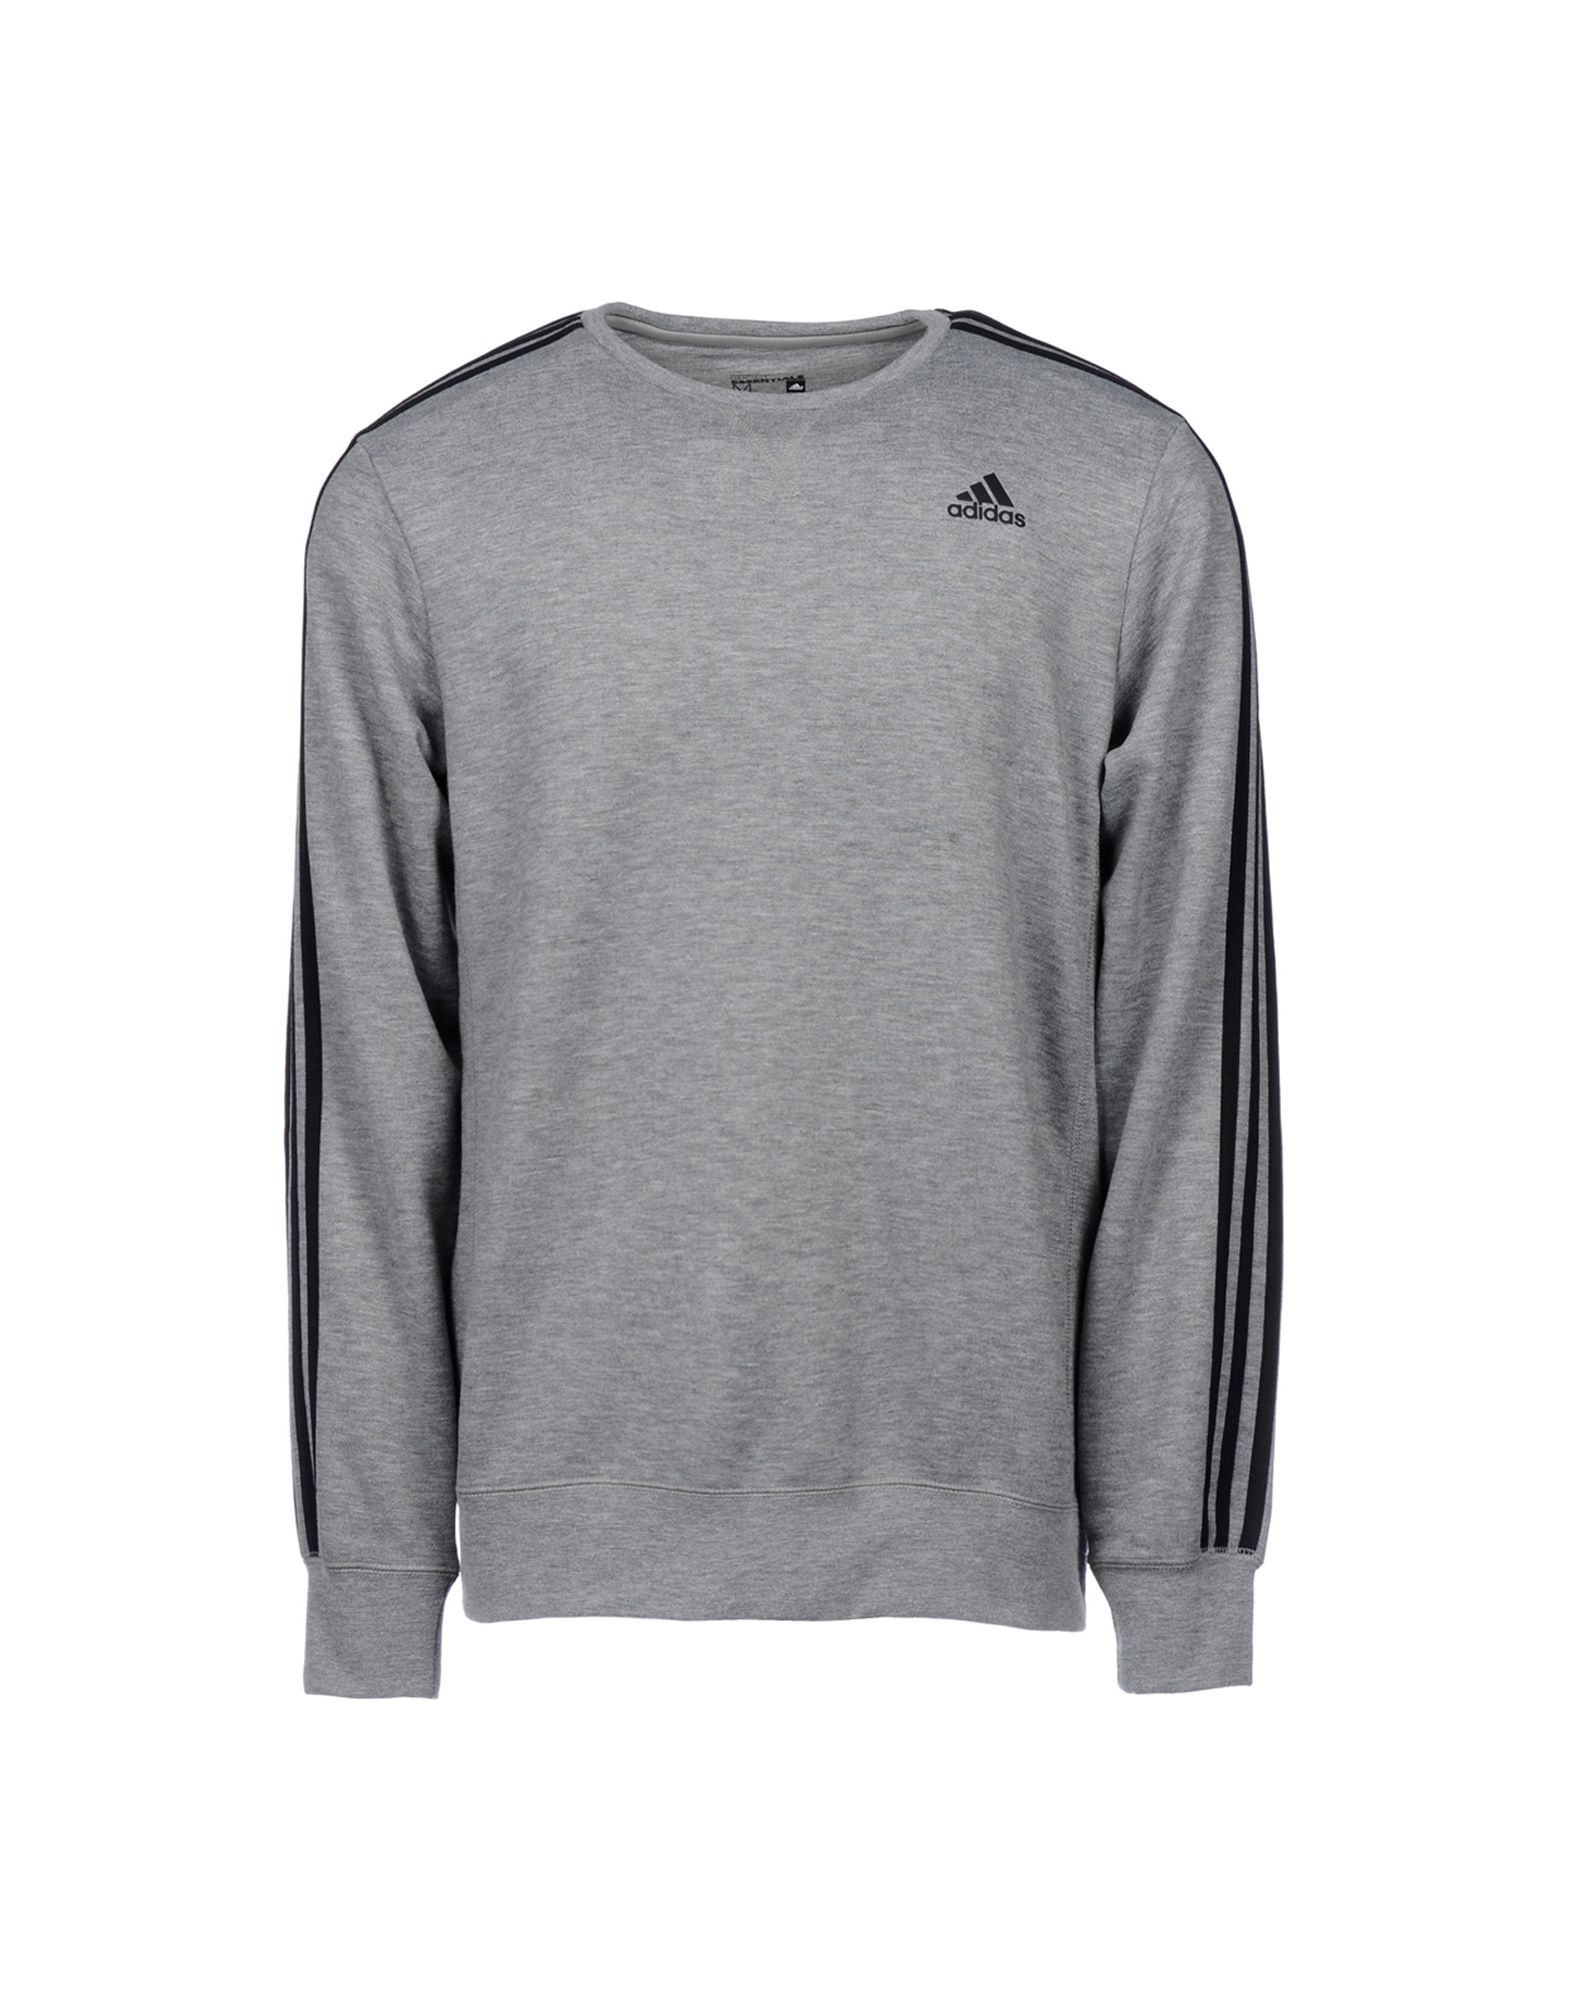 blazer nike beige - Adidas Sweatshirt in Gray for Men (Grey) | Lyst